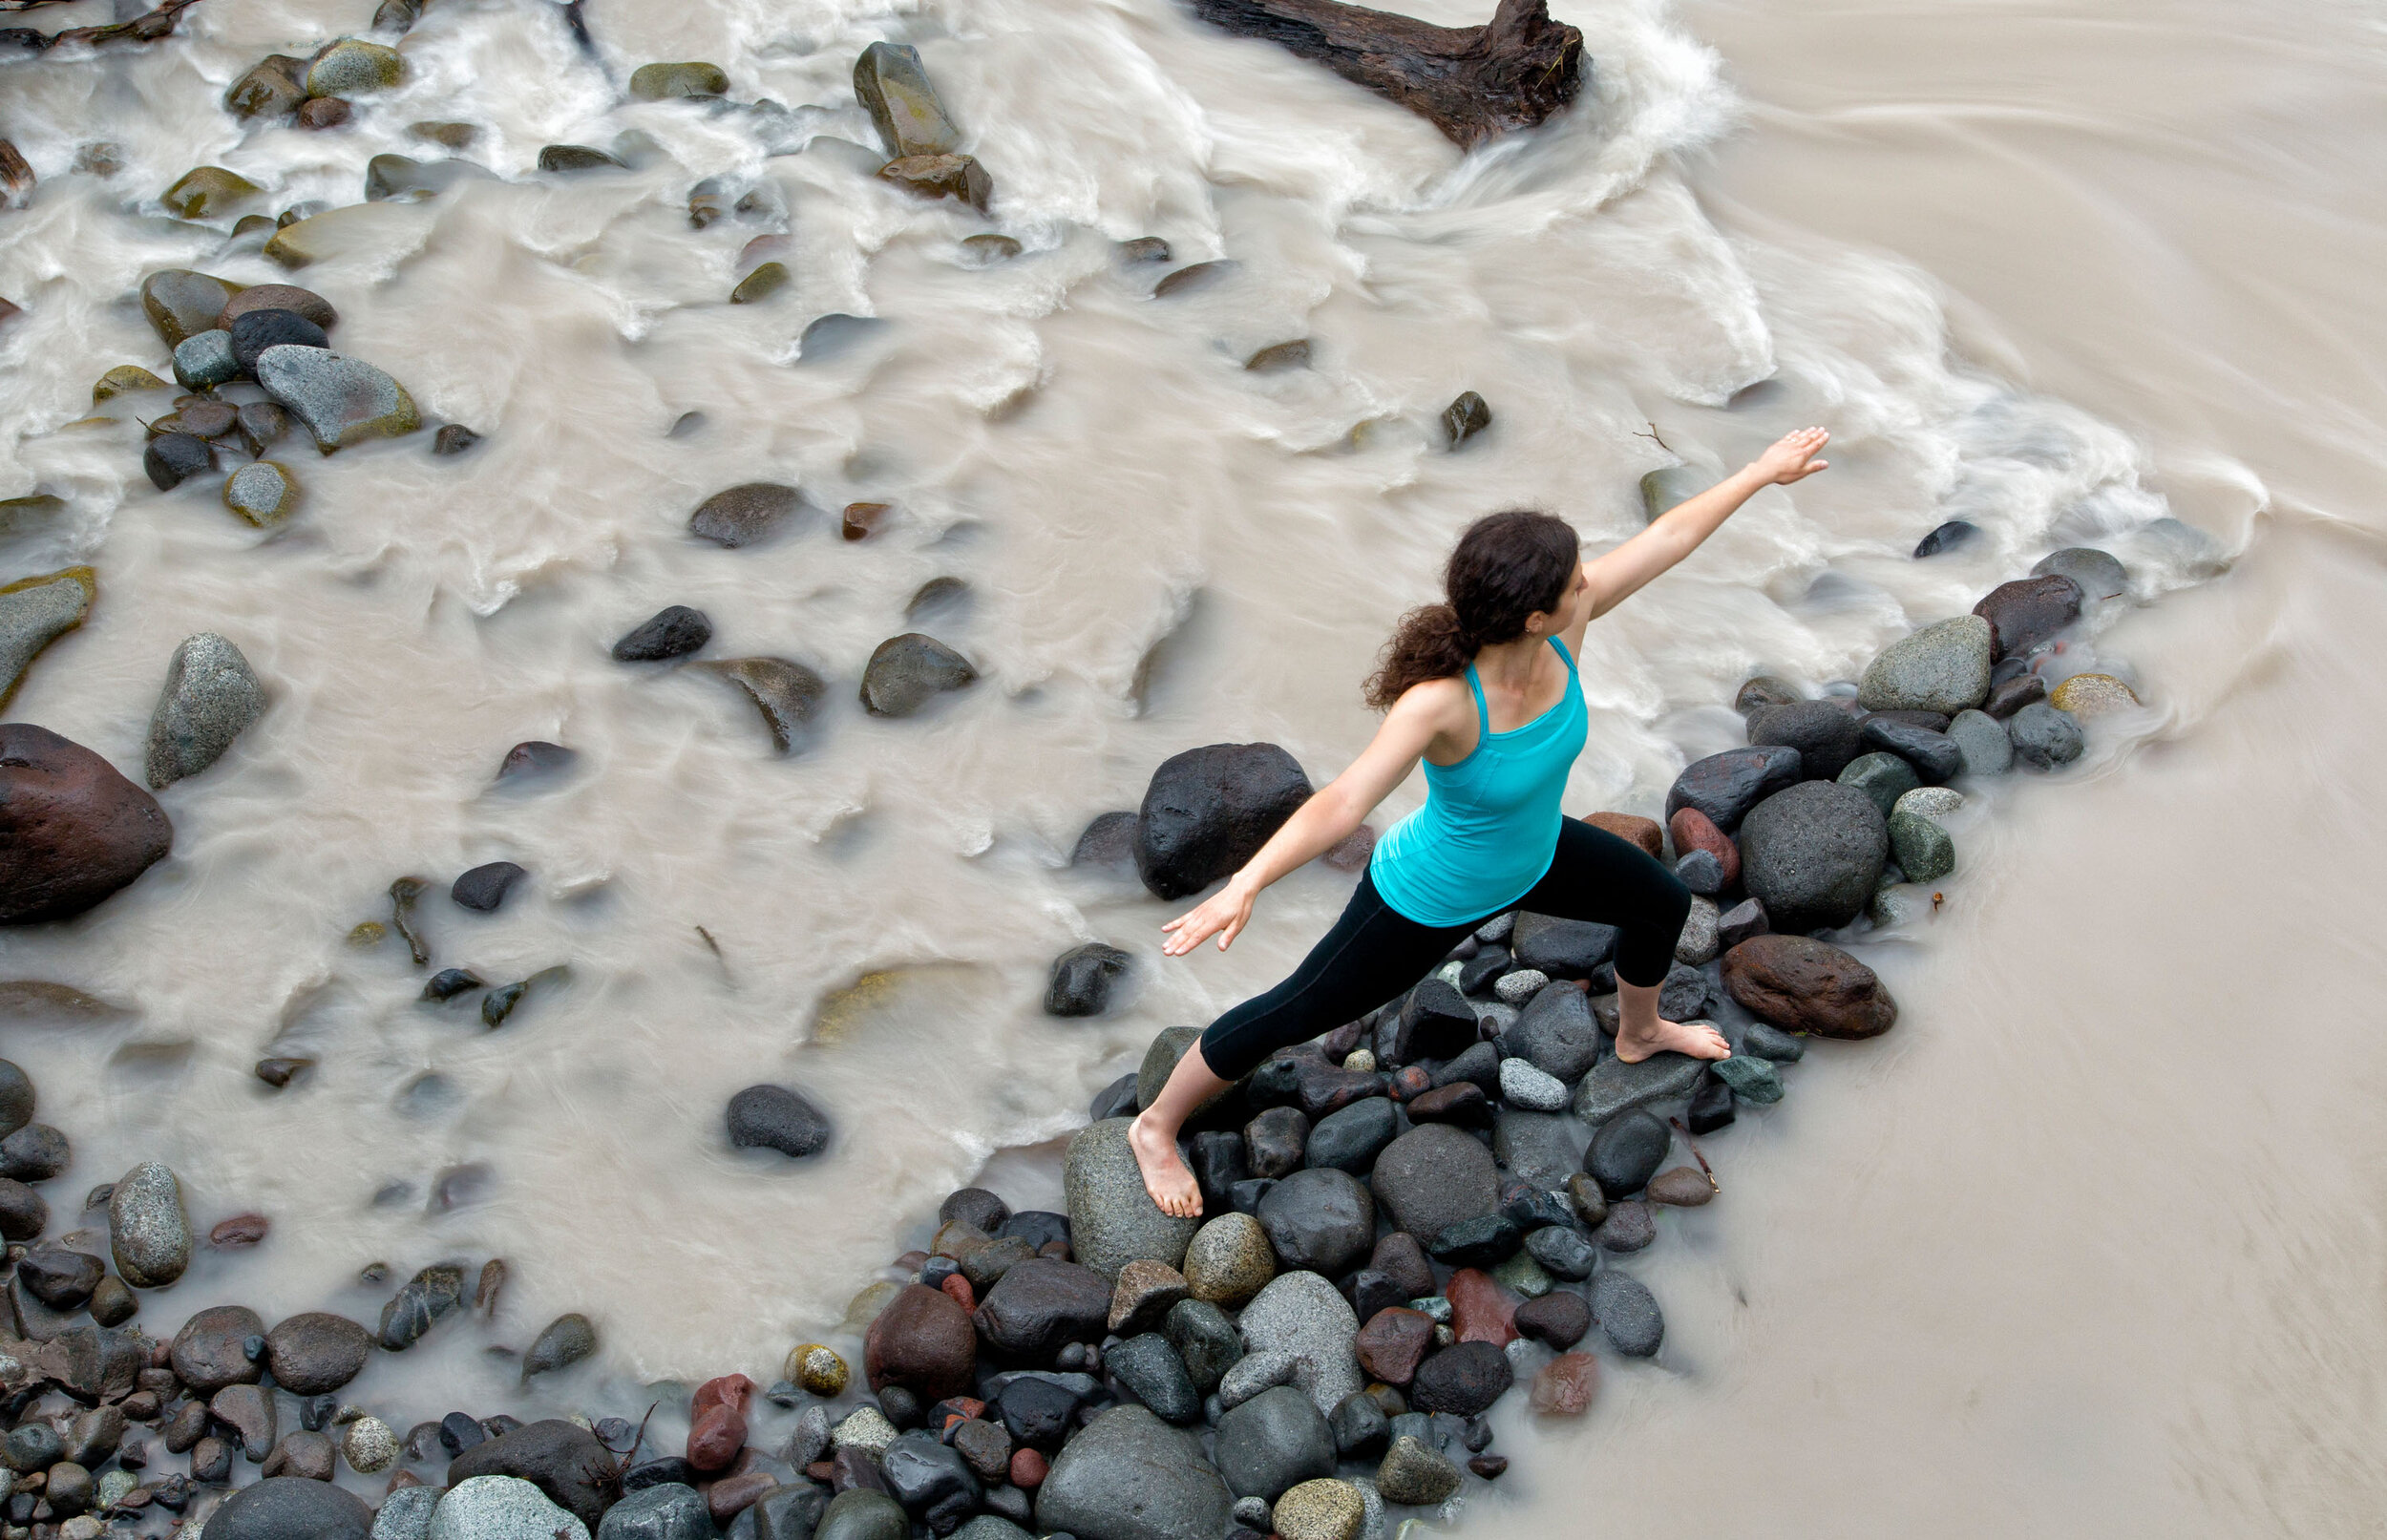  Lifestyle: Elizabeth Kovar practicing yoga in the Carbon River Valley, Mt. Rainier National Park, Washington 